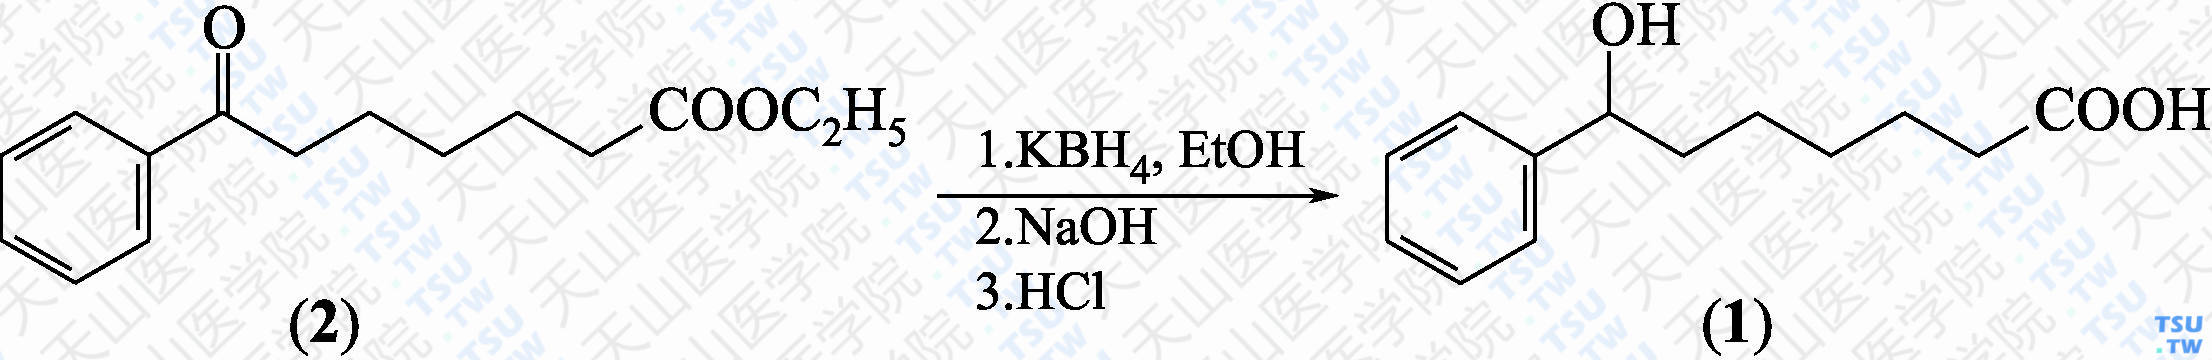 7-羟基-7-苯基庚酸（分子式：C<sub>13</sub>H<sub>18</sub>O<sub>3</sub>）的合成方法路线及其结构式